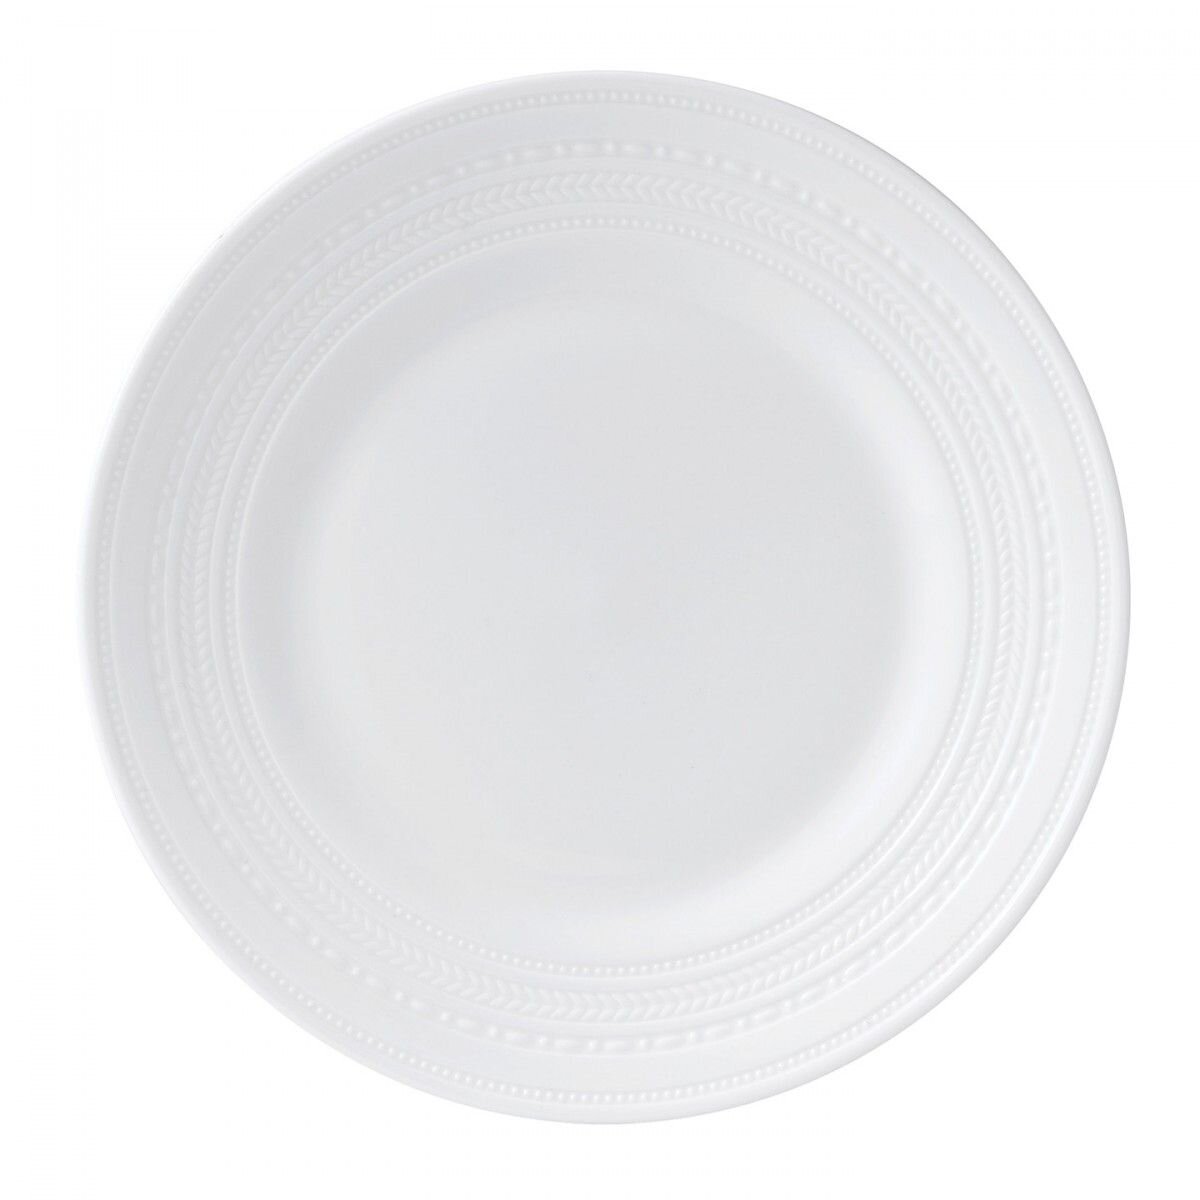 Plate, 20 cm.jpg